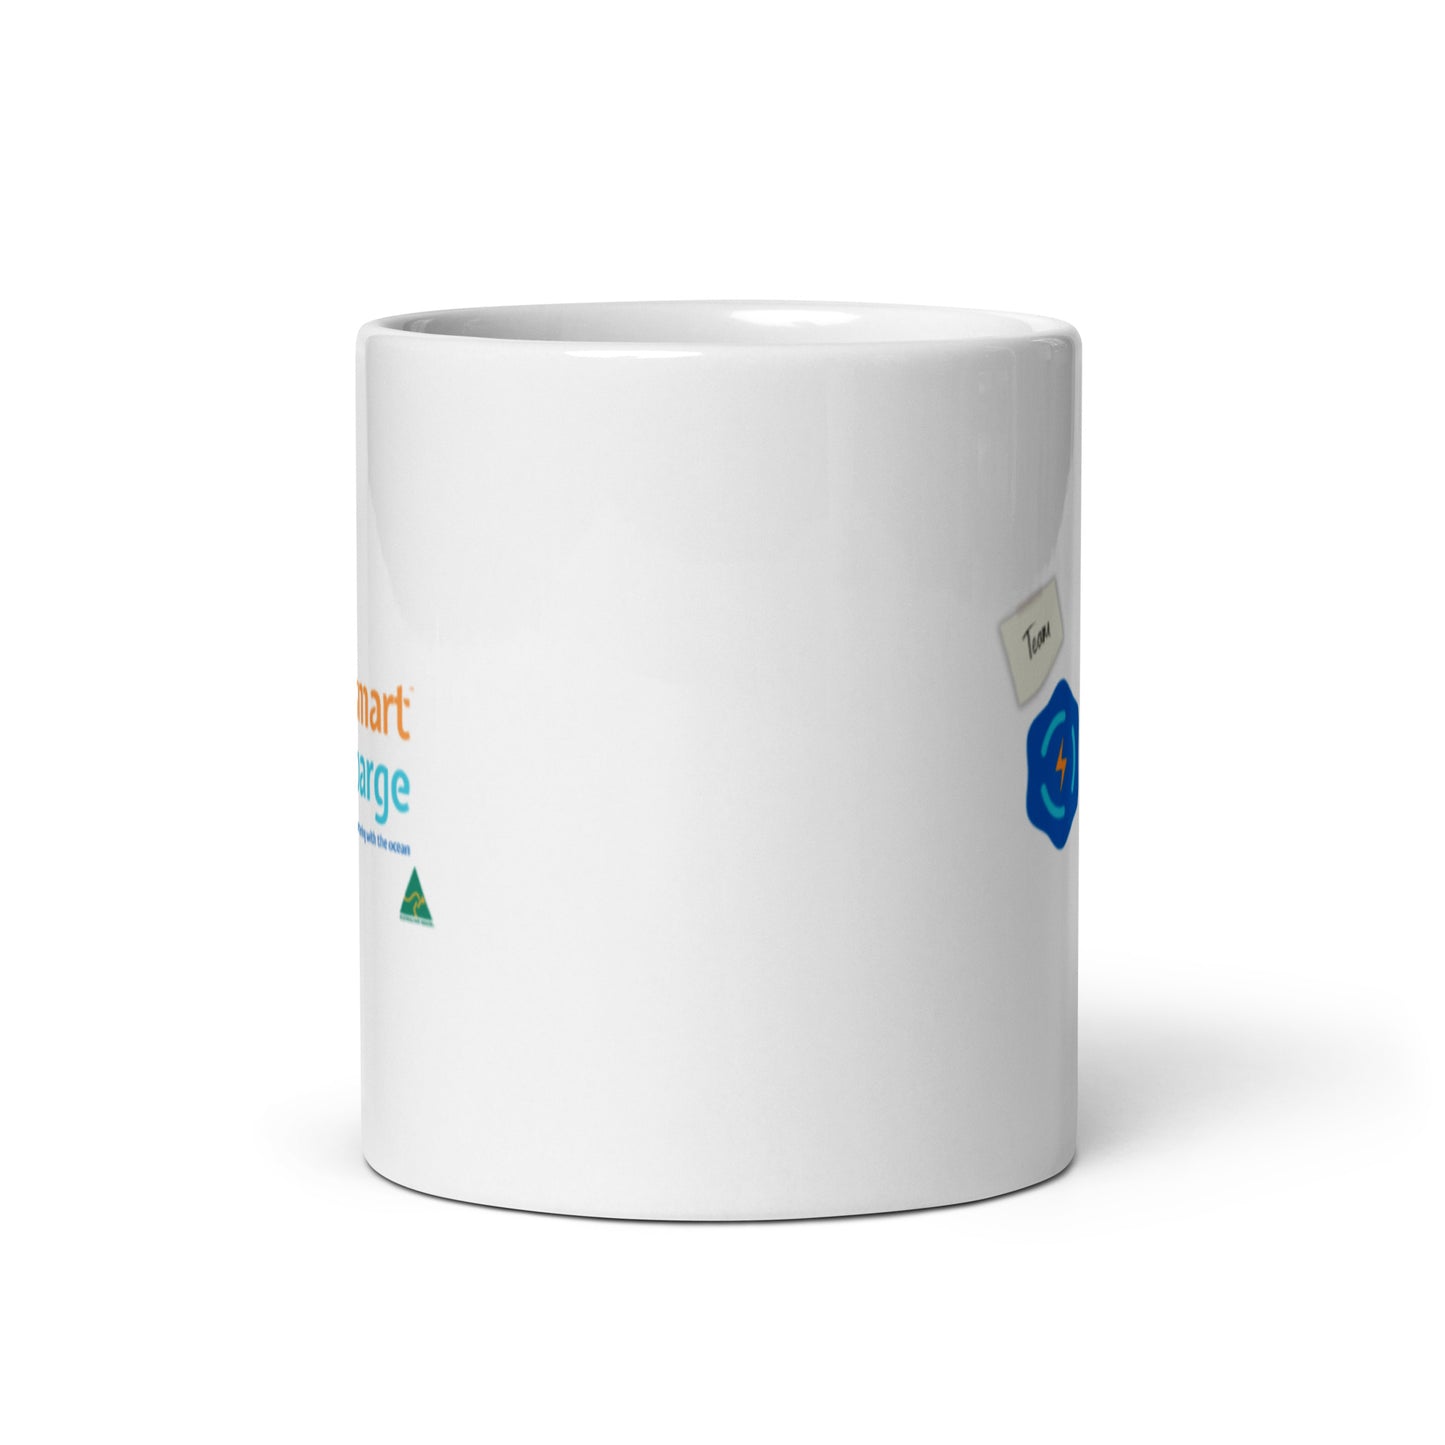 [UK Delivery] - Team Smart Barge White Glossy Mug